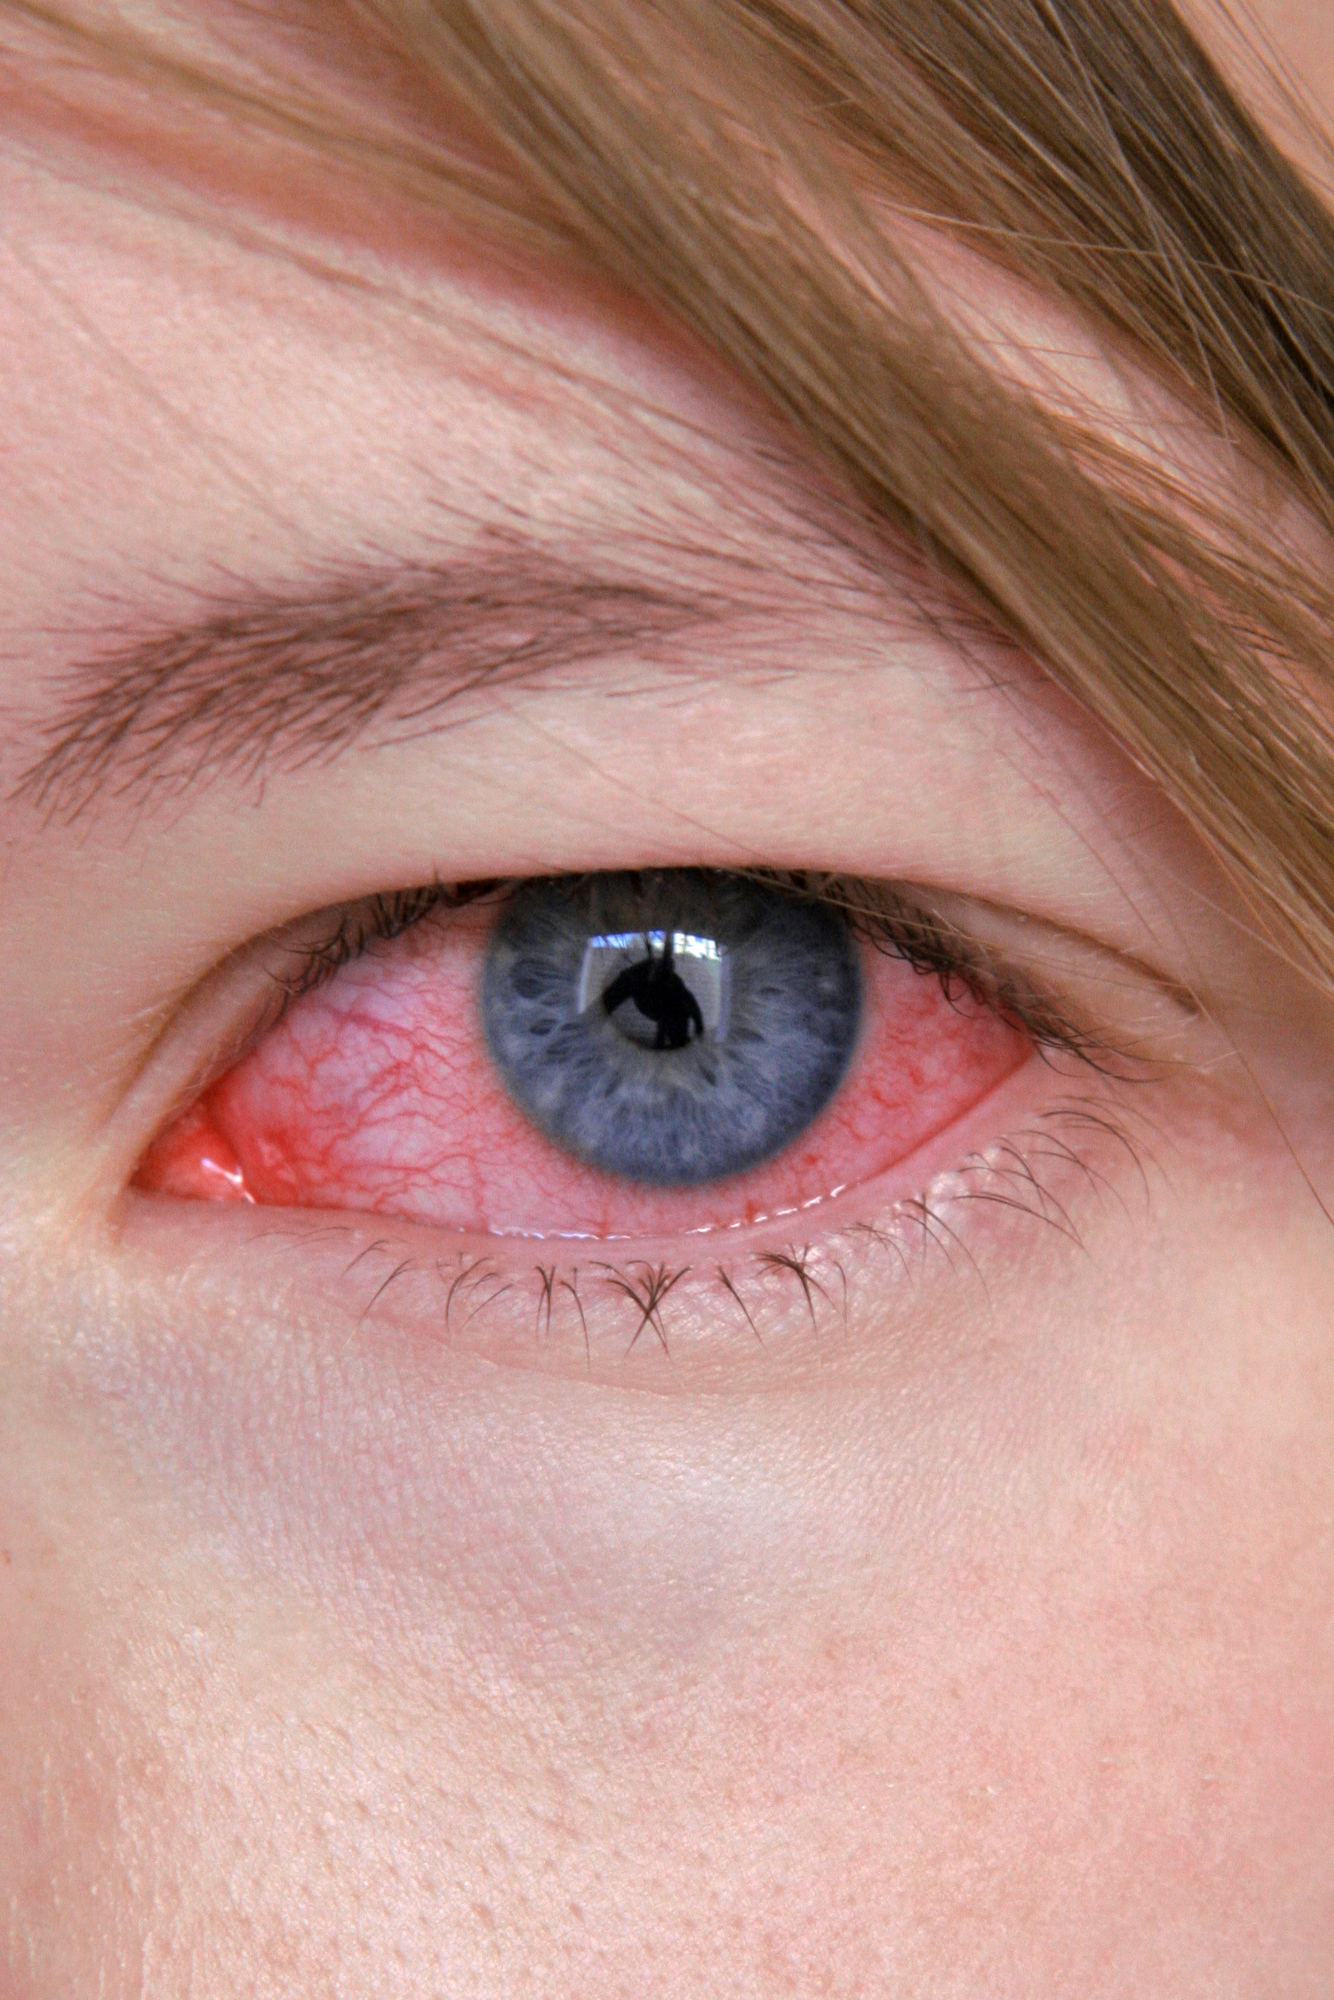 pink eye treatment antibiotic